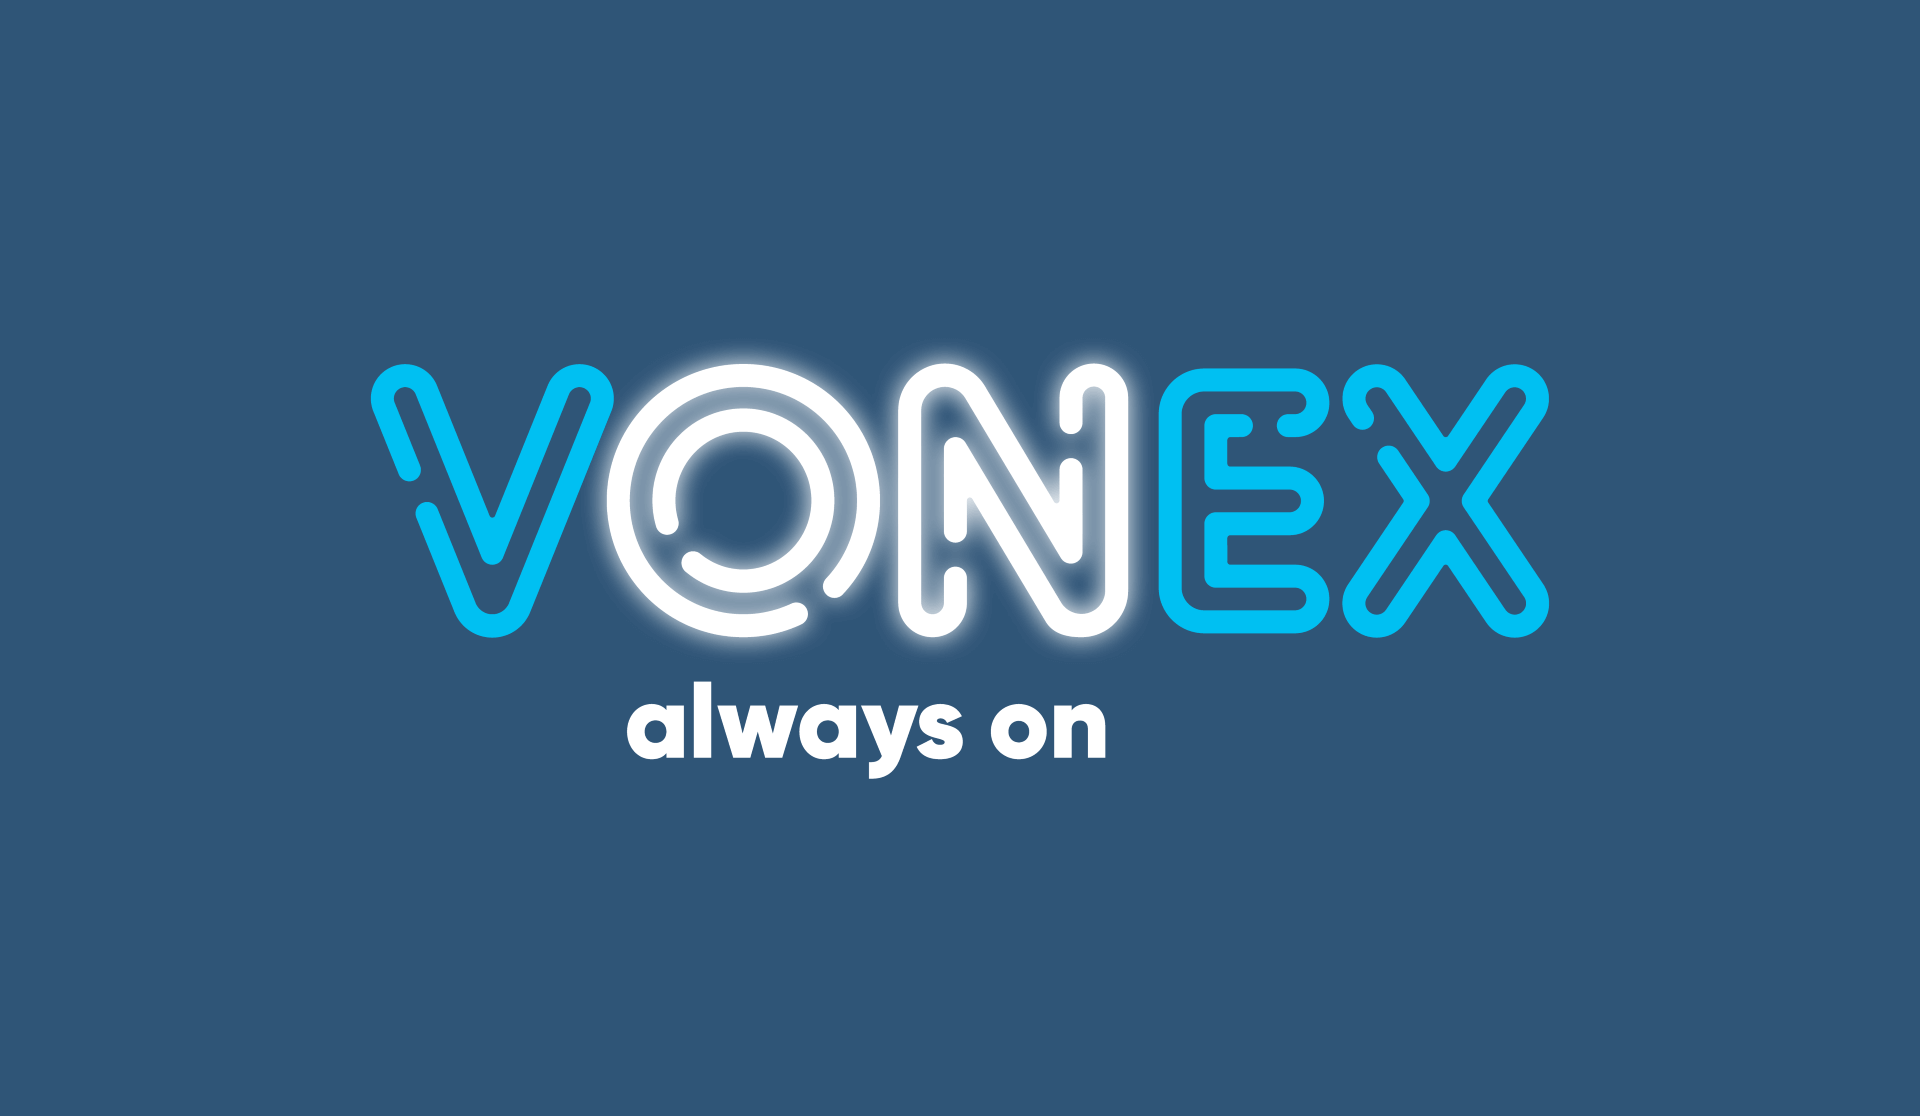 Case study of Vonex